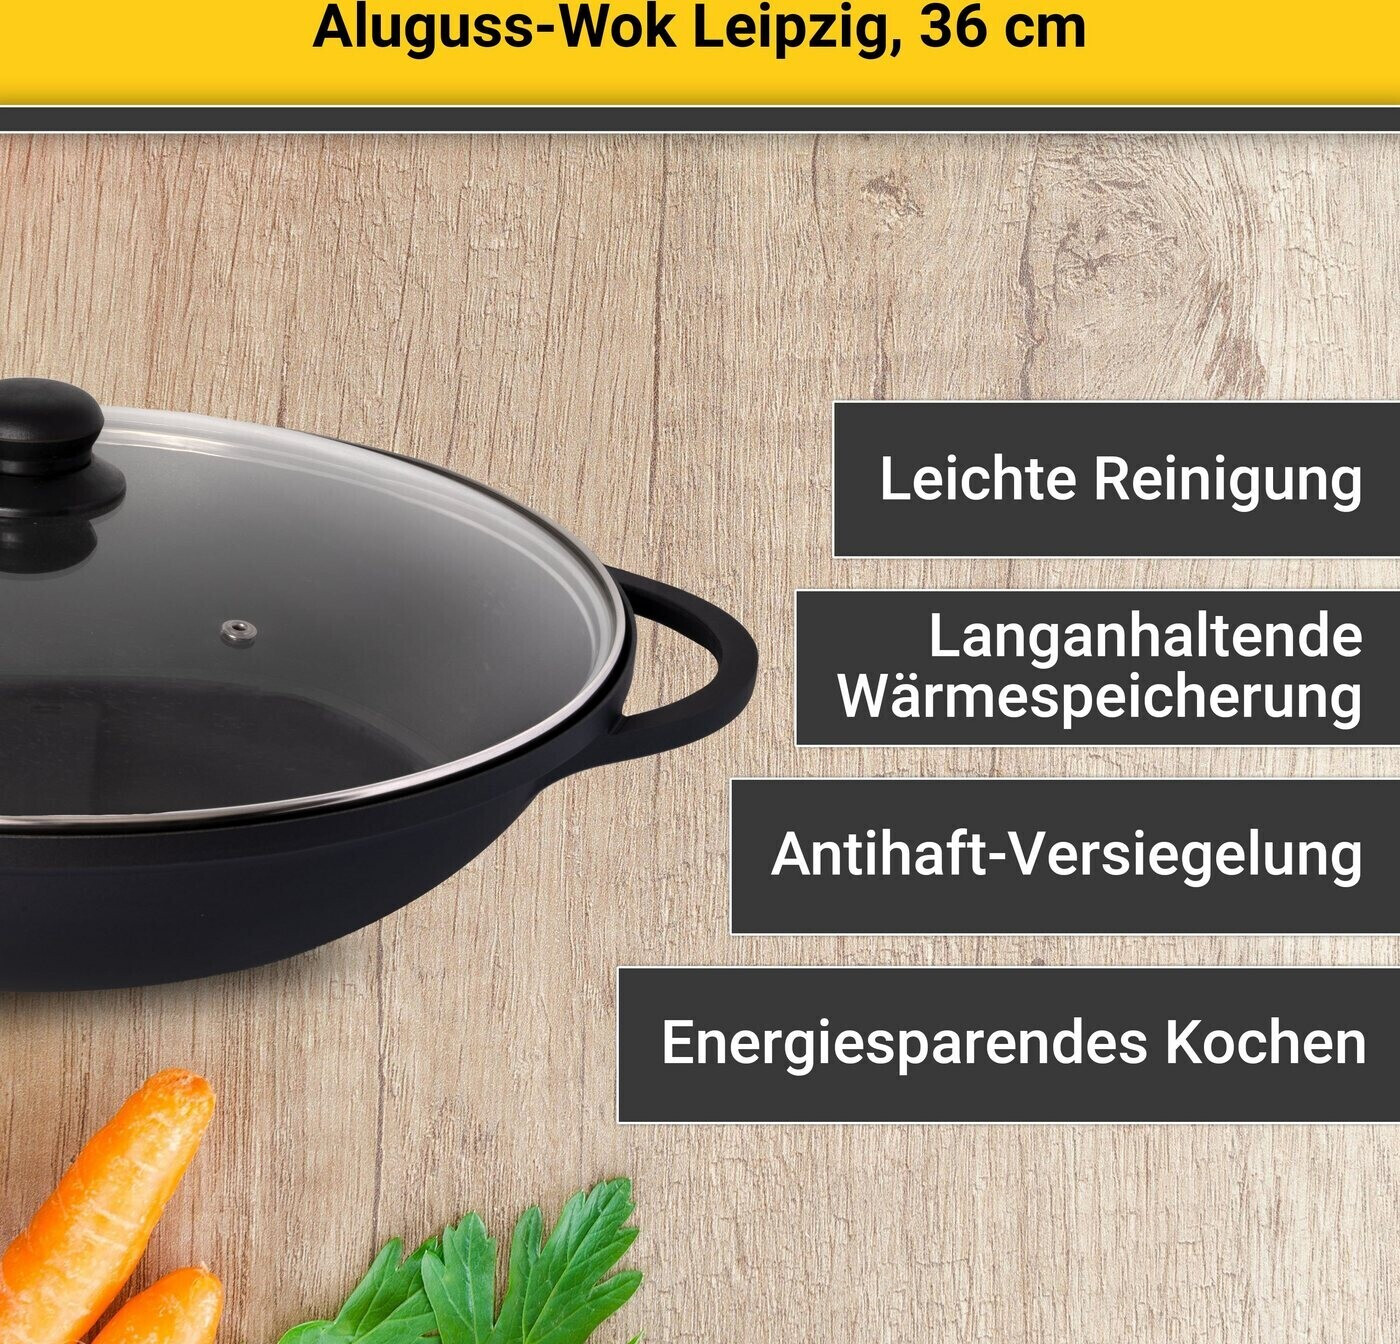 Krüger € Preisvergleich cm Leipzig Aluguss-Wok bei ab 36 45,00 |